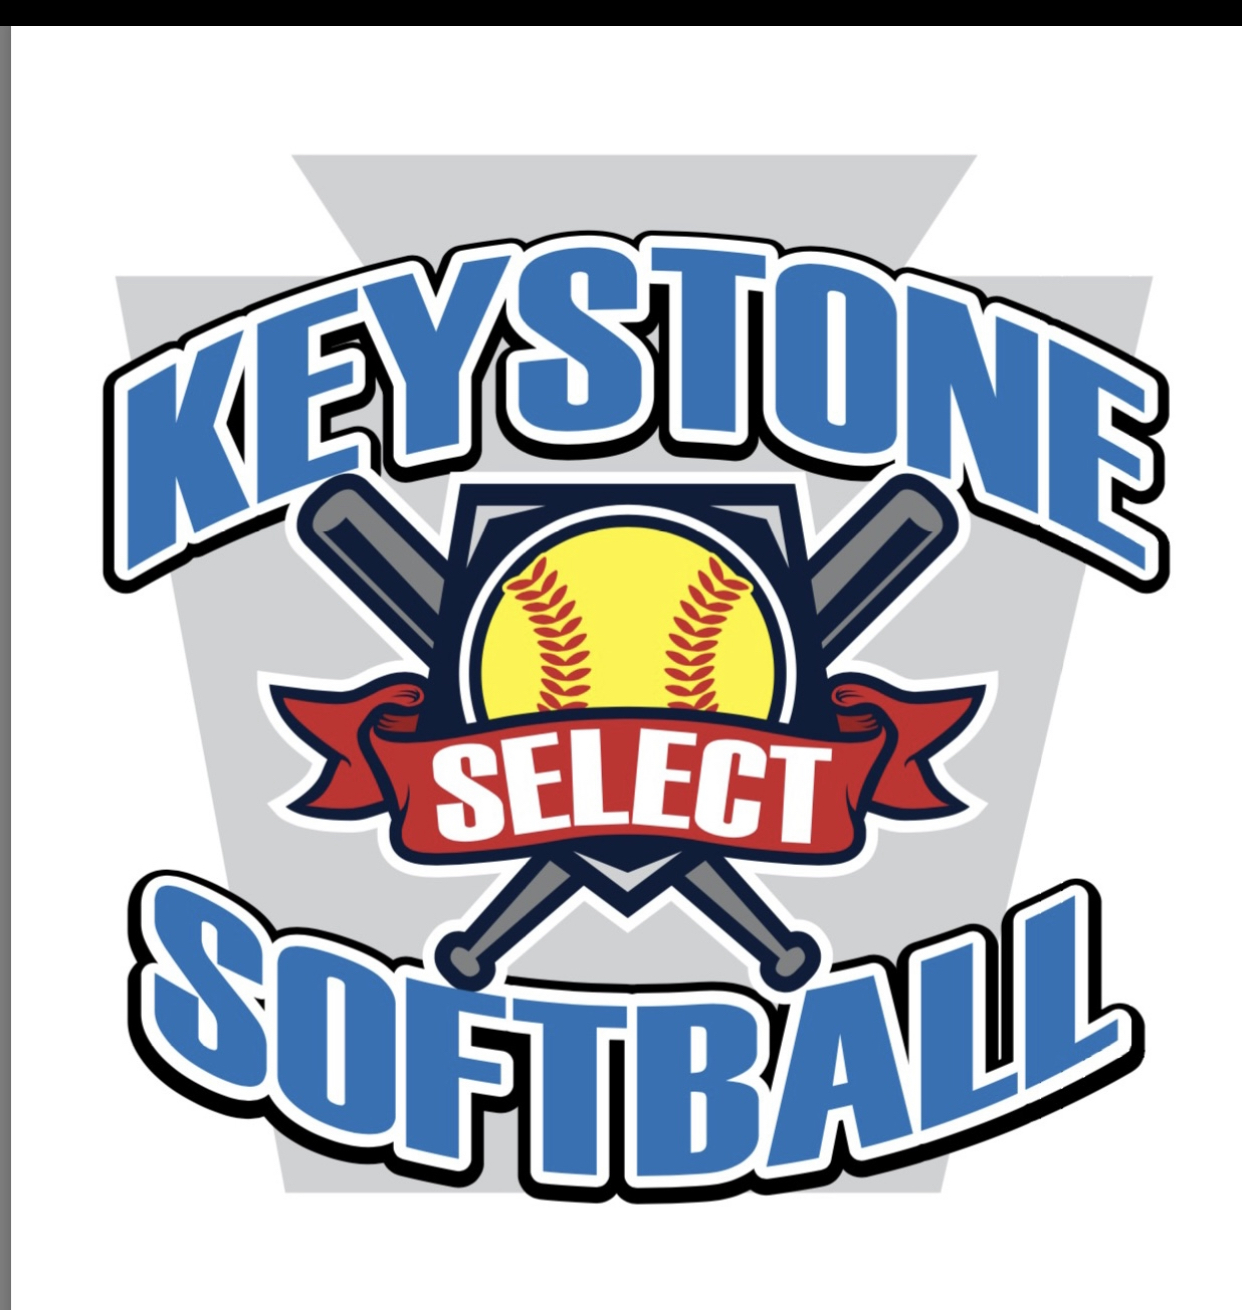 Keystone Select Softball Summer Sizzler Drums-Scranton Area Logo